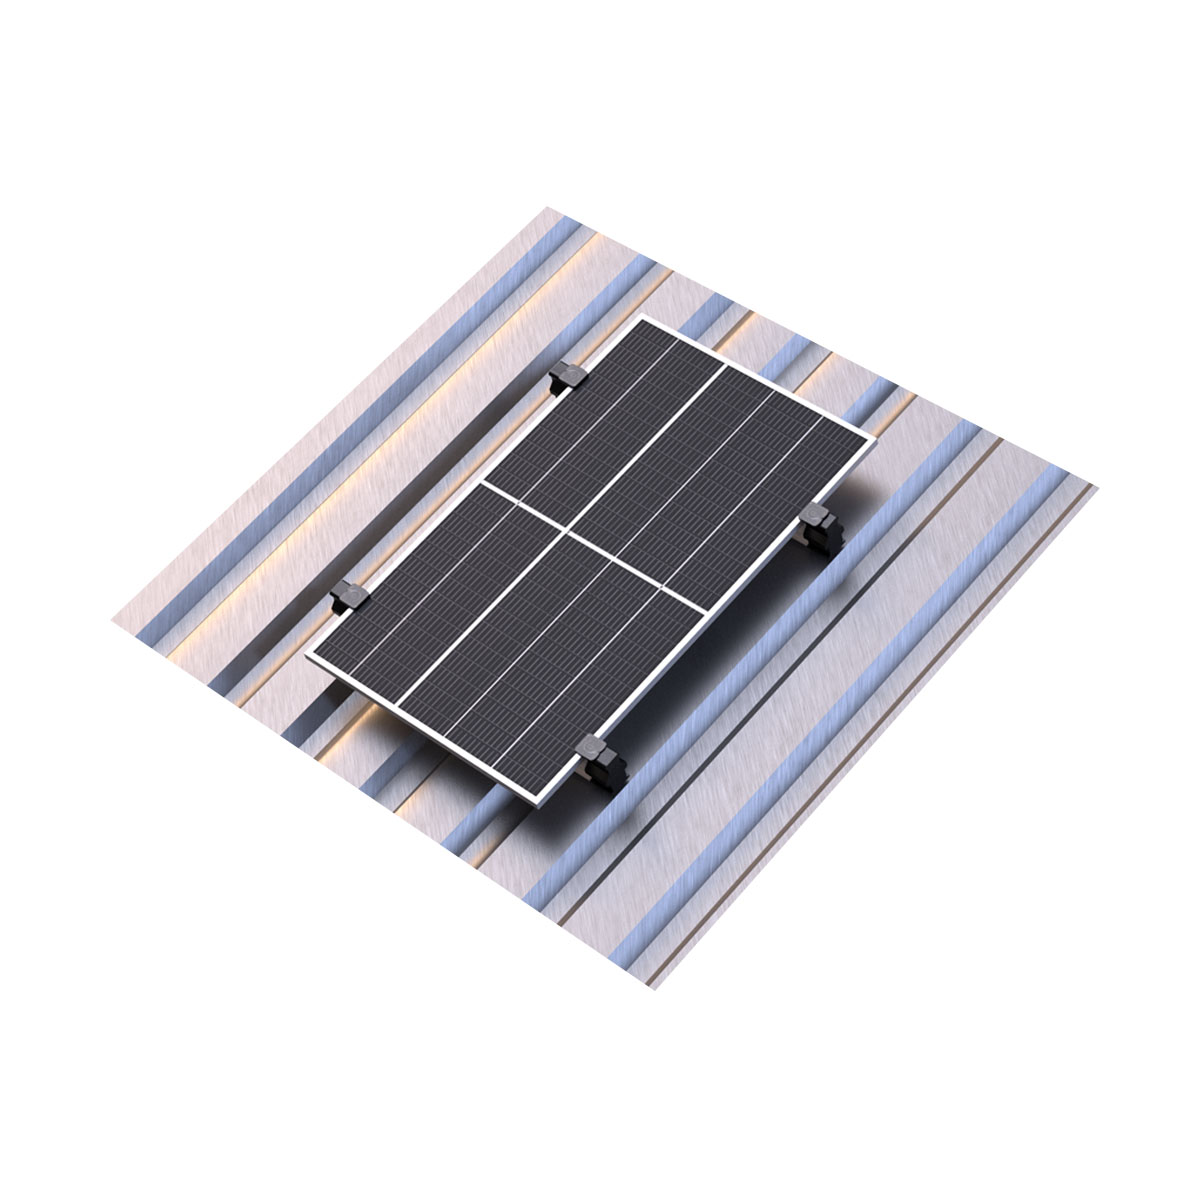 Plug & Play Solarset - 1 paneel 400 Watt - Portait Staaldak